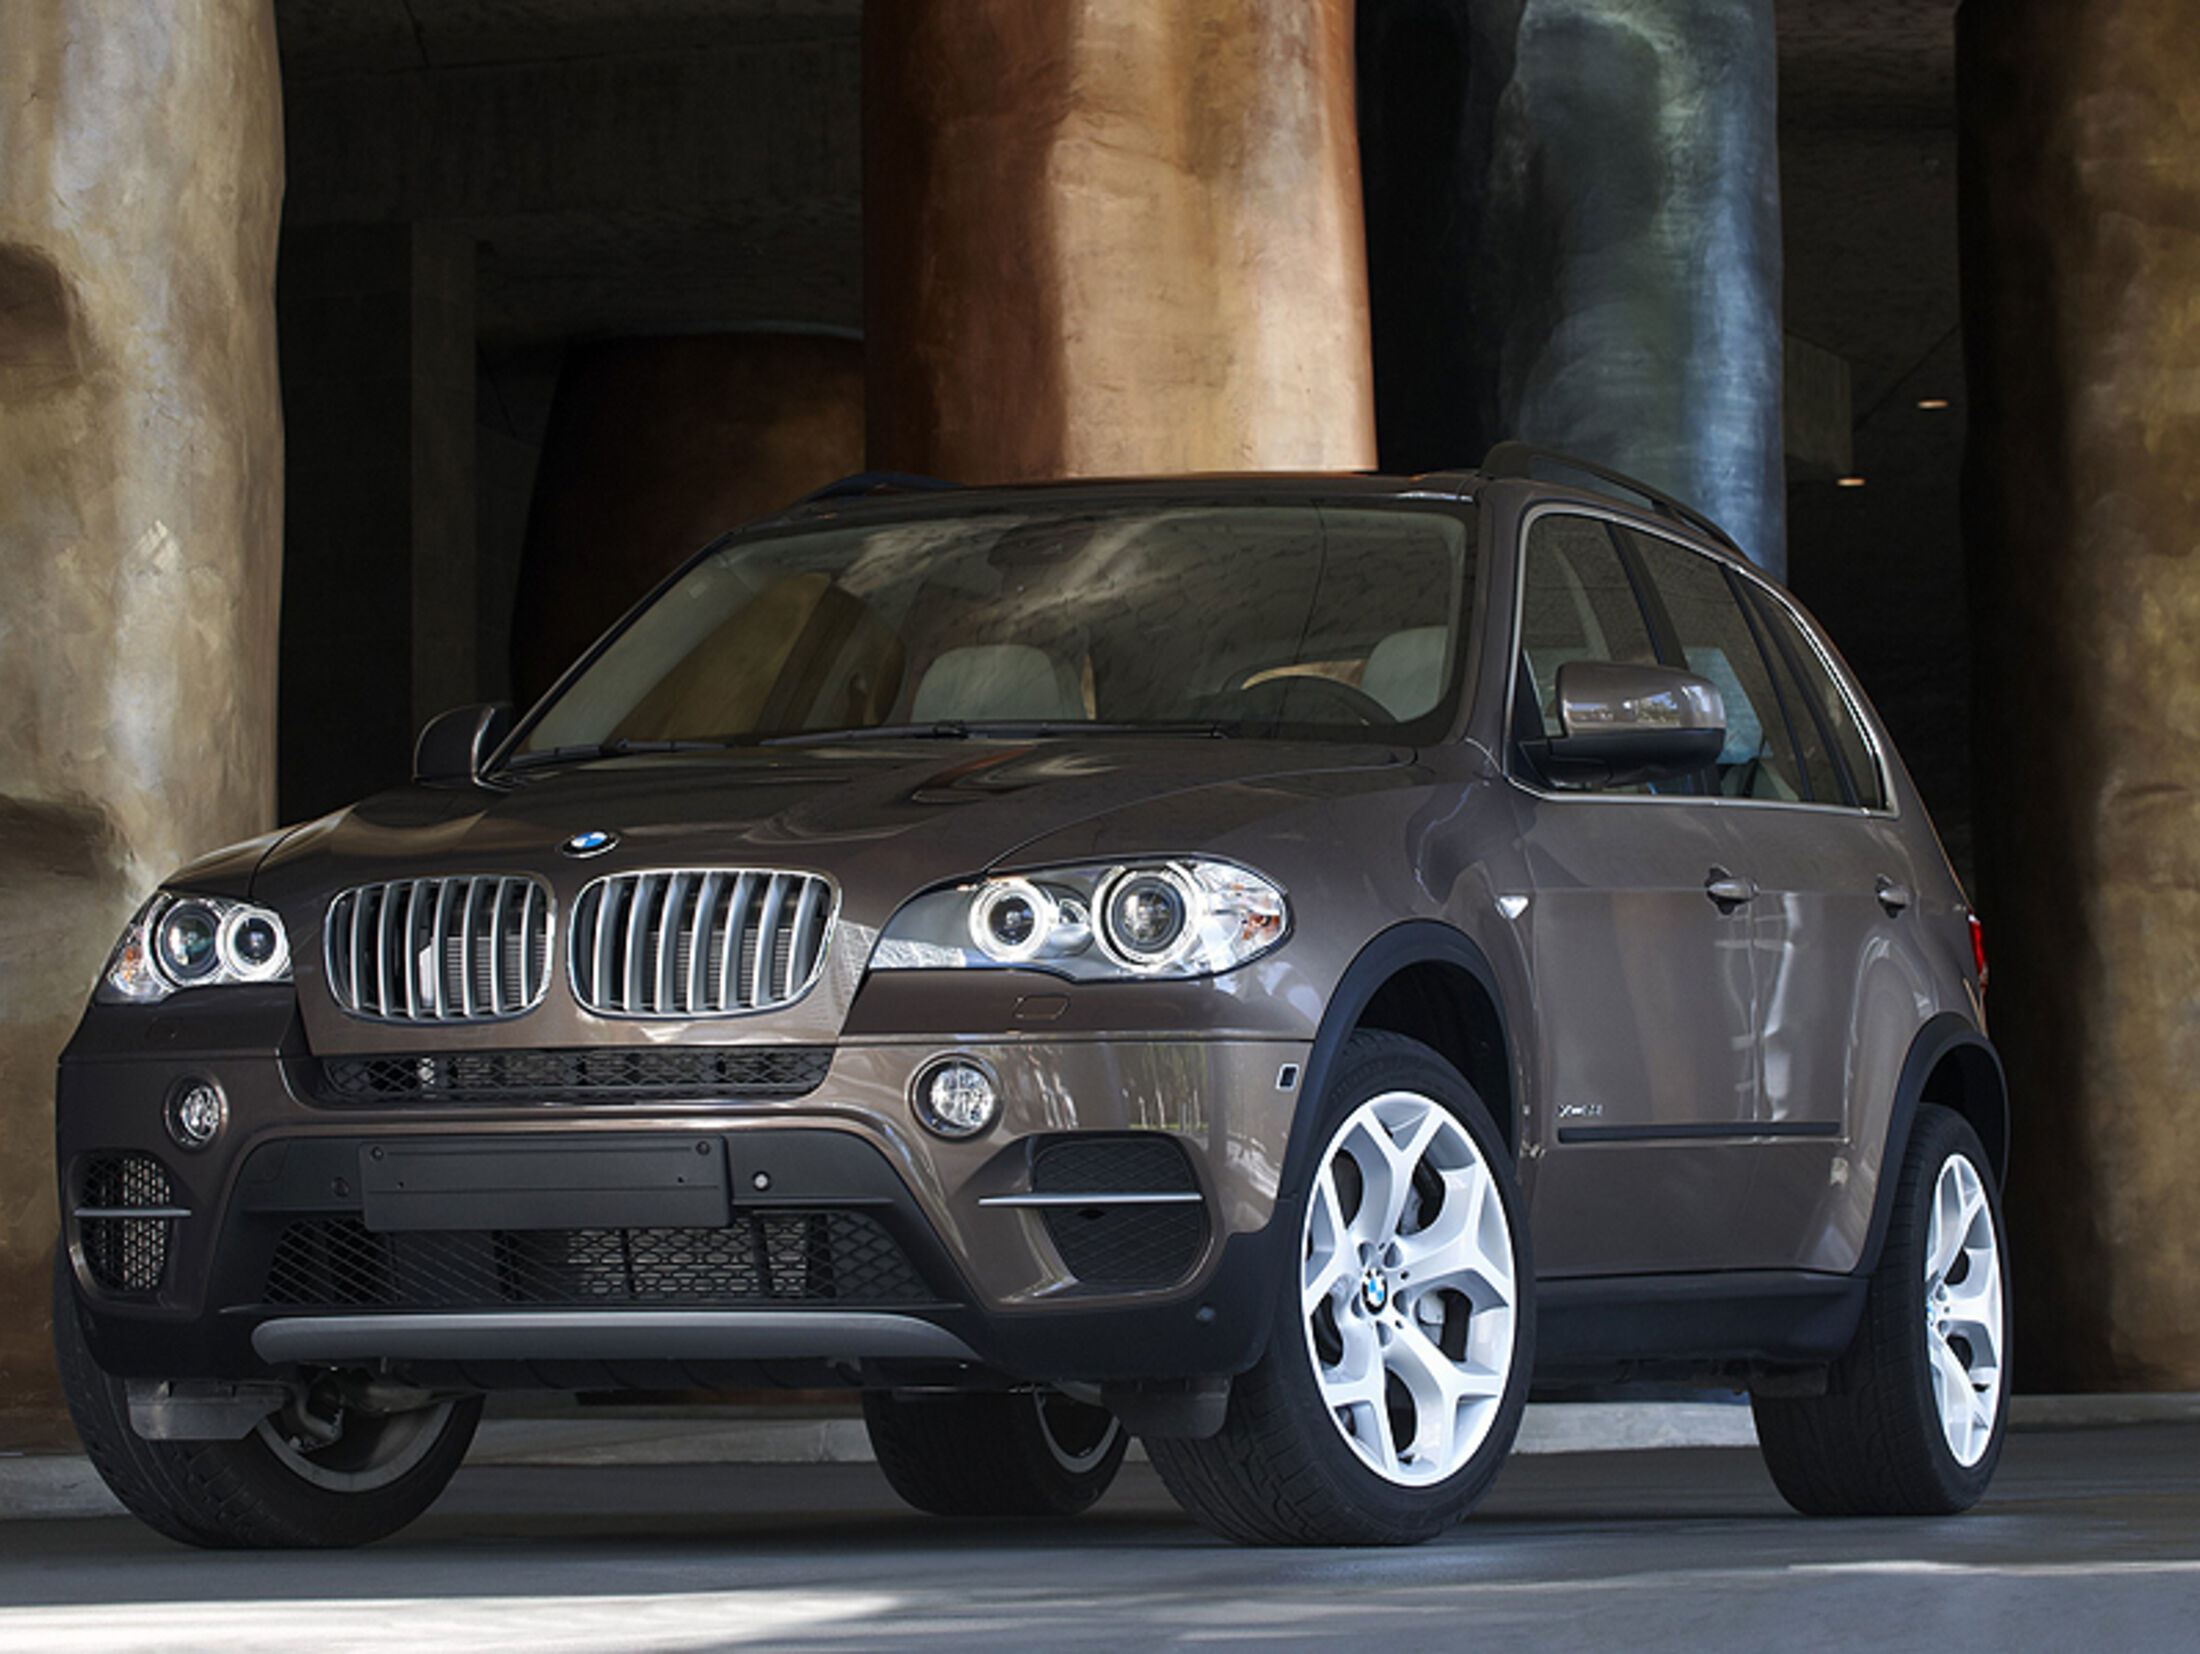 https://imgr1.auto-motor-und-sport.de/BMW-X5-Facelift-2010-jsonLd4x3-296de6c5-305001.jpg